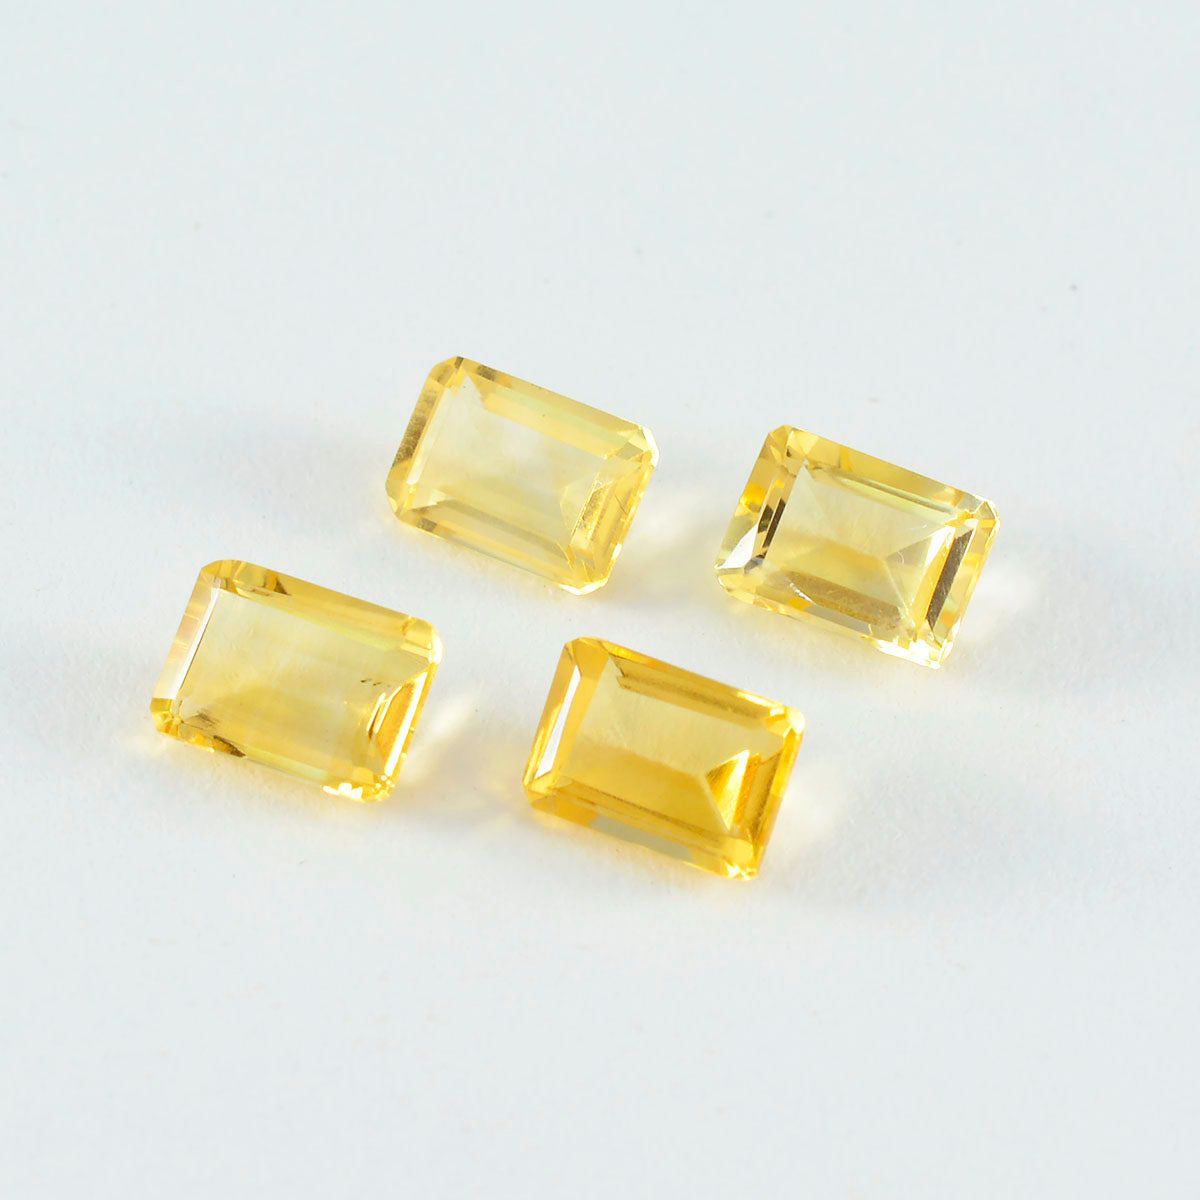 Riyogems 1PC Genuine Yellow Citrine Faceted 7x9 mm Octagon Shape pretty Quality Loose Gemstone